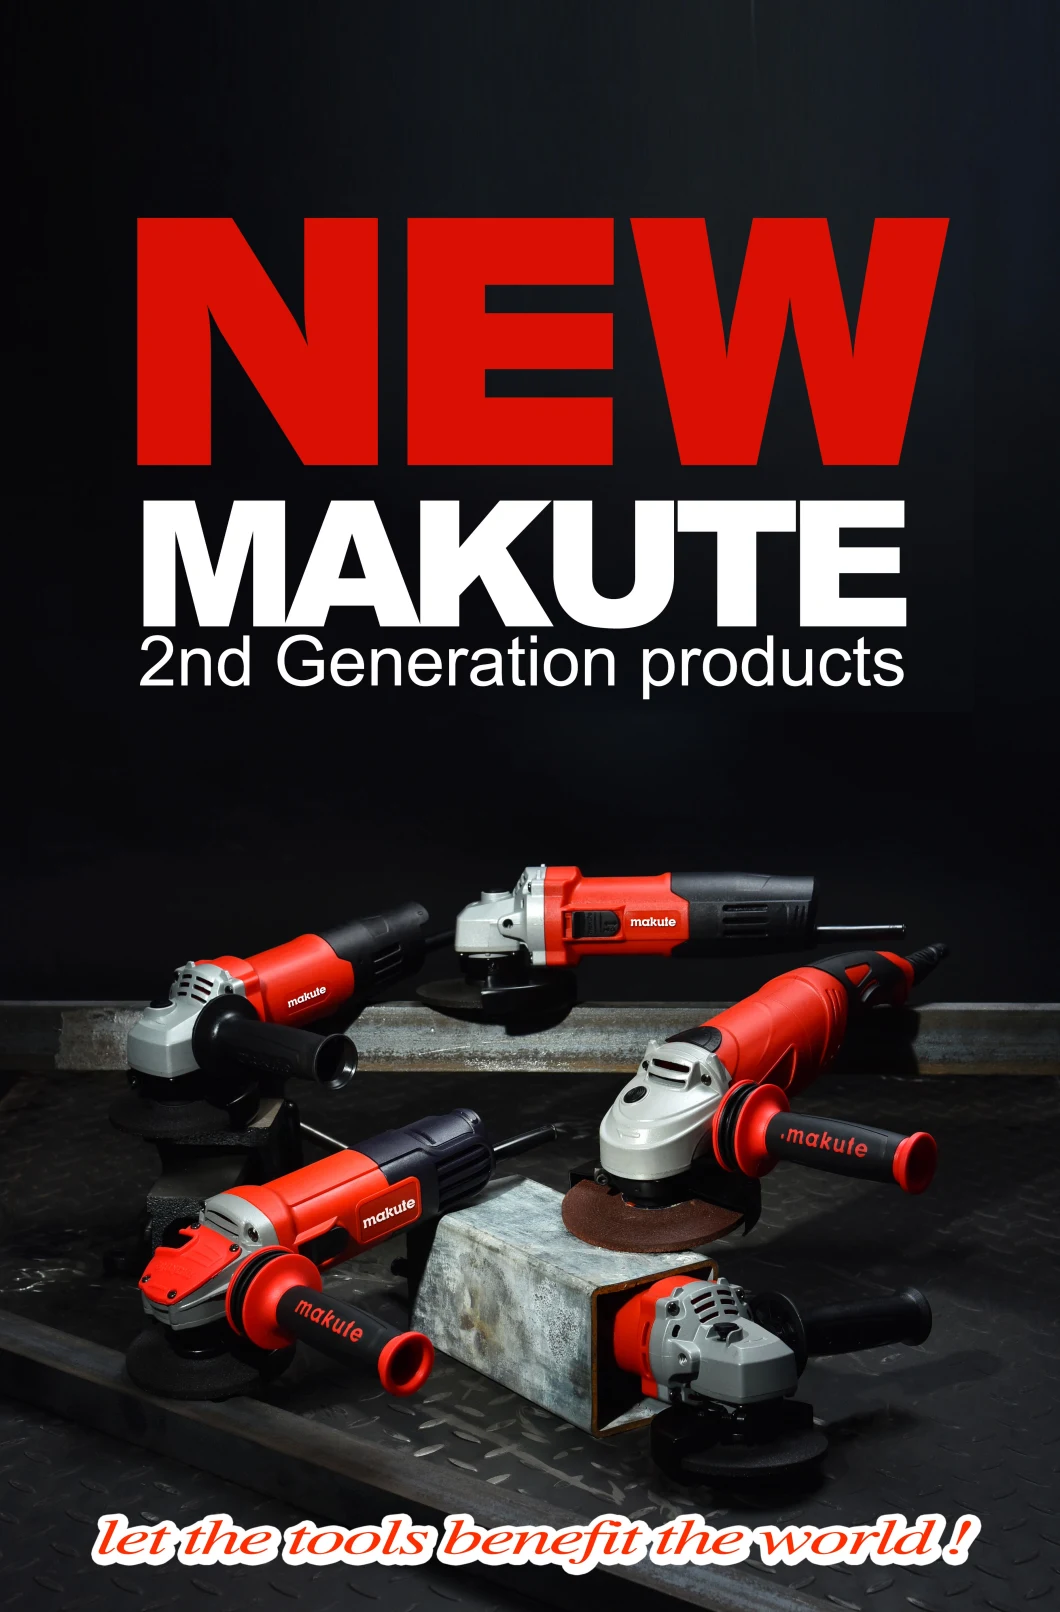 Makute Cordless Drill 12/16/20V Lion Battery 15cc